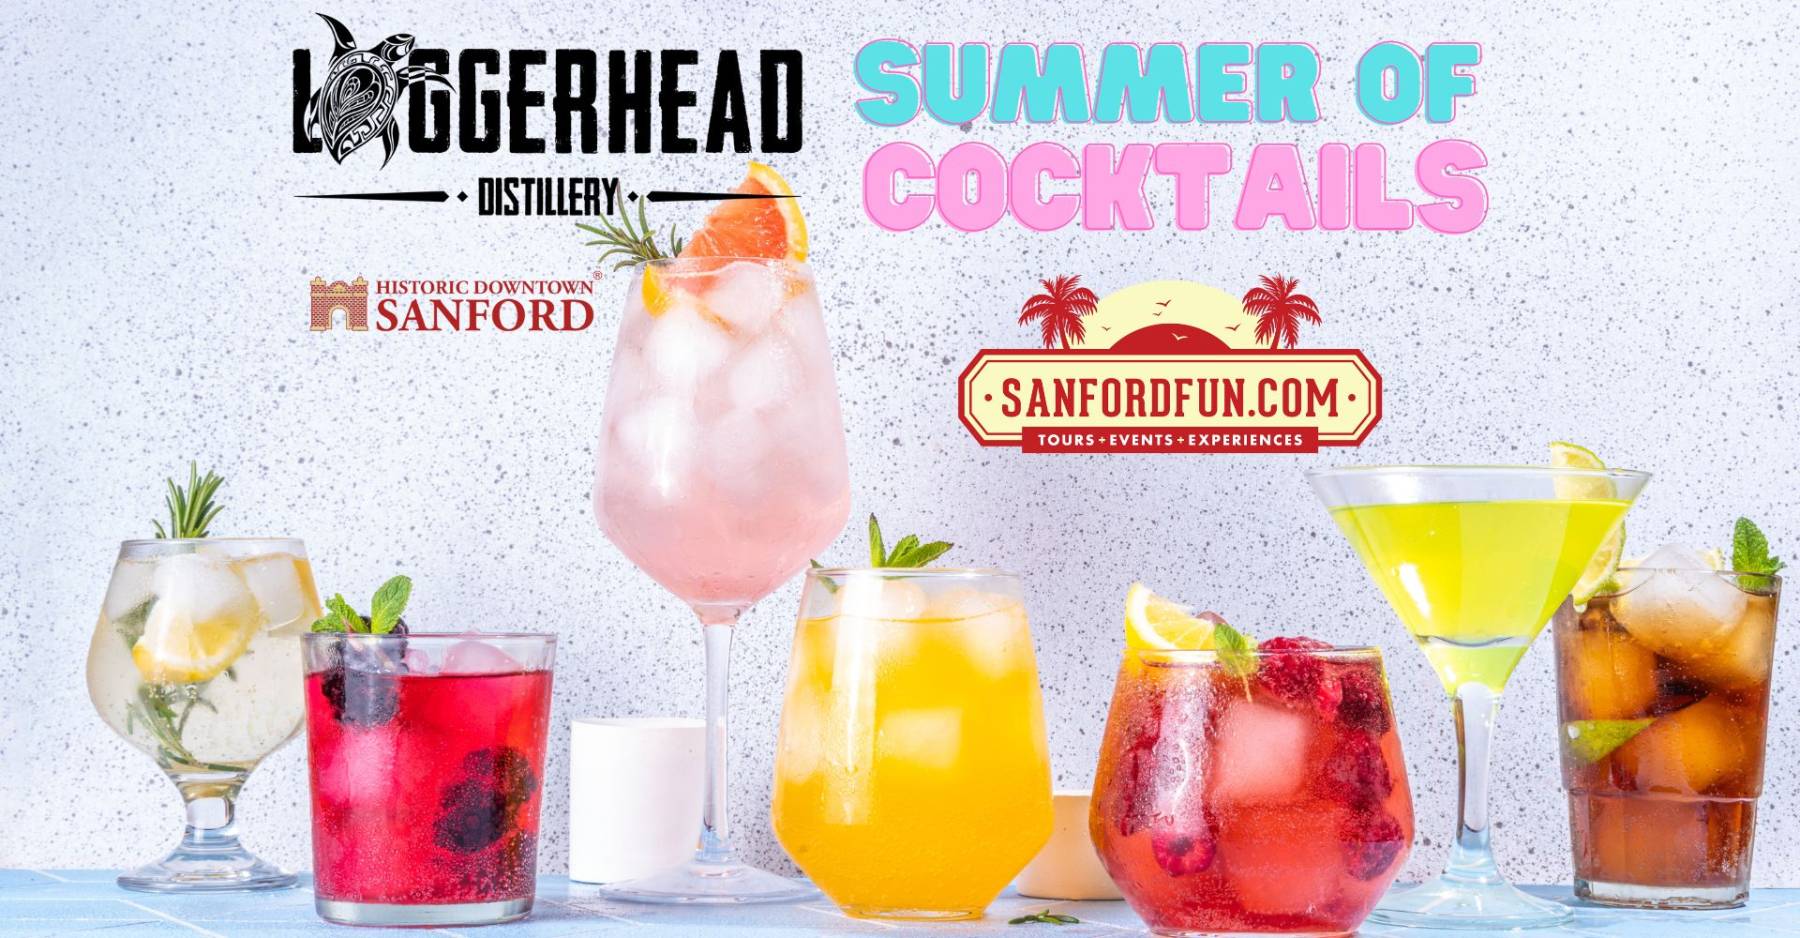 Loggerhead Summer of Cocktails